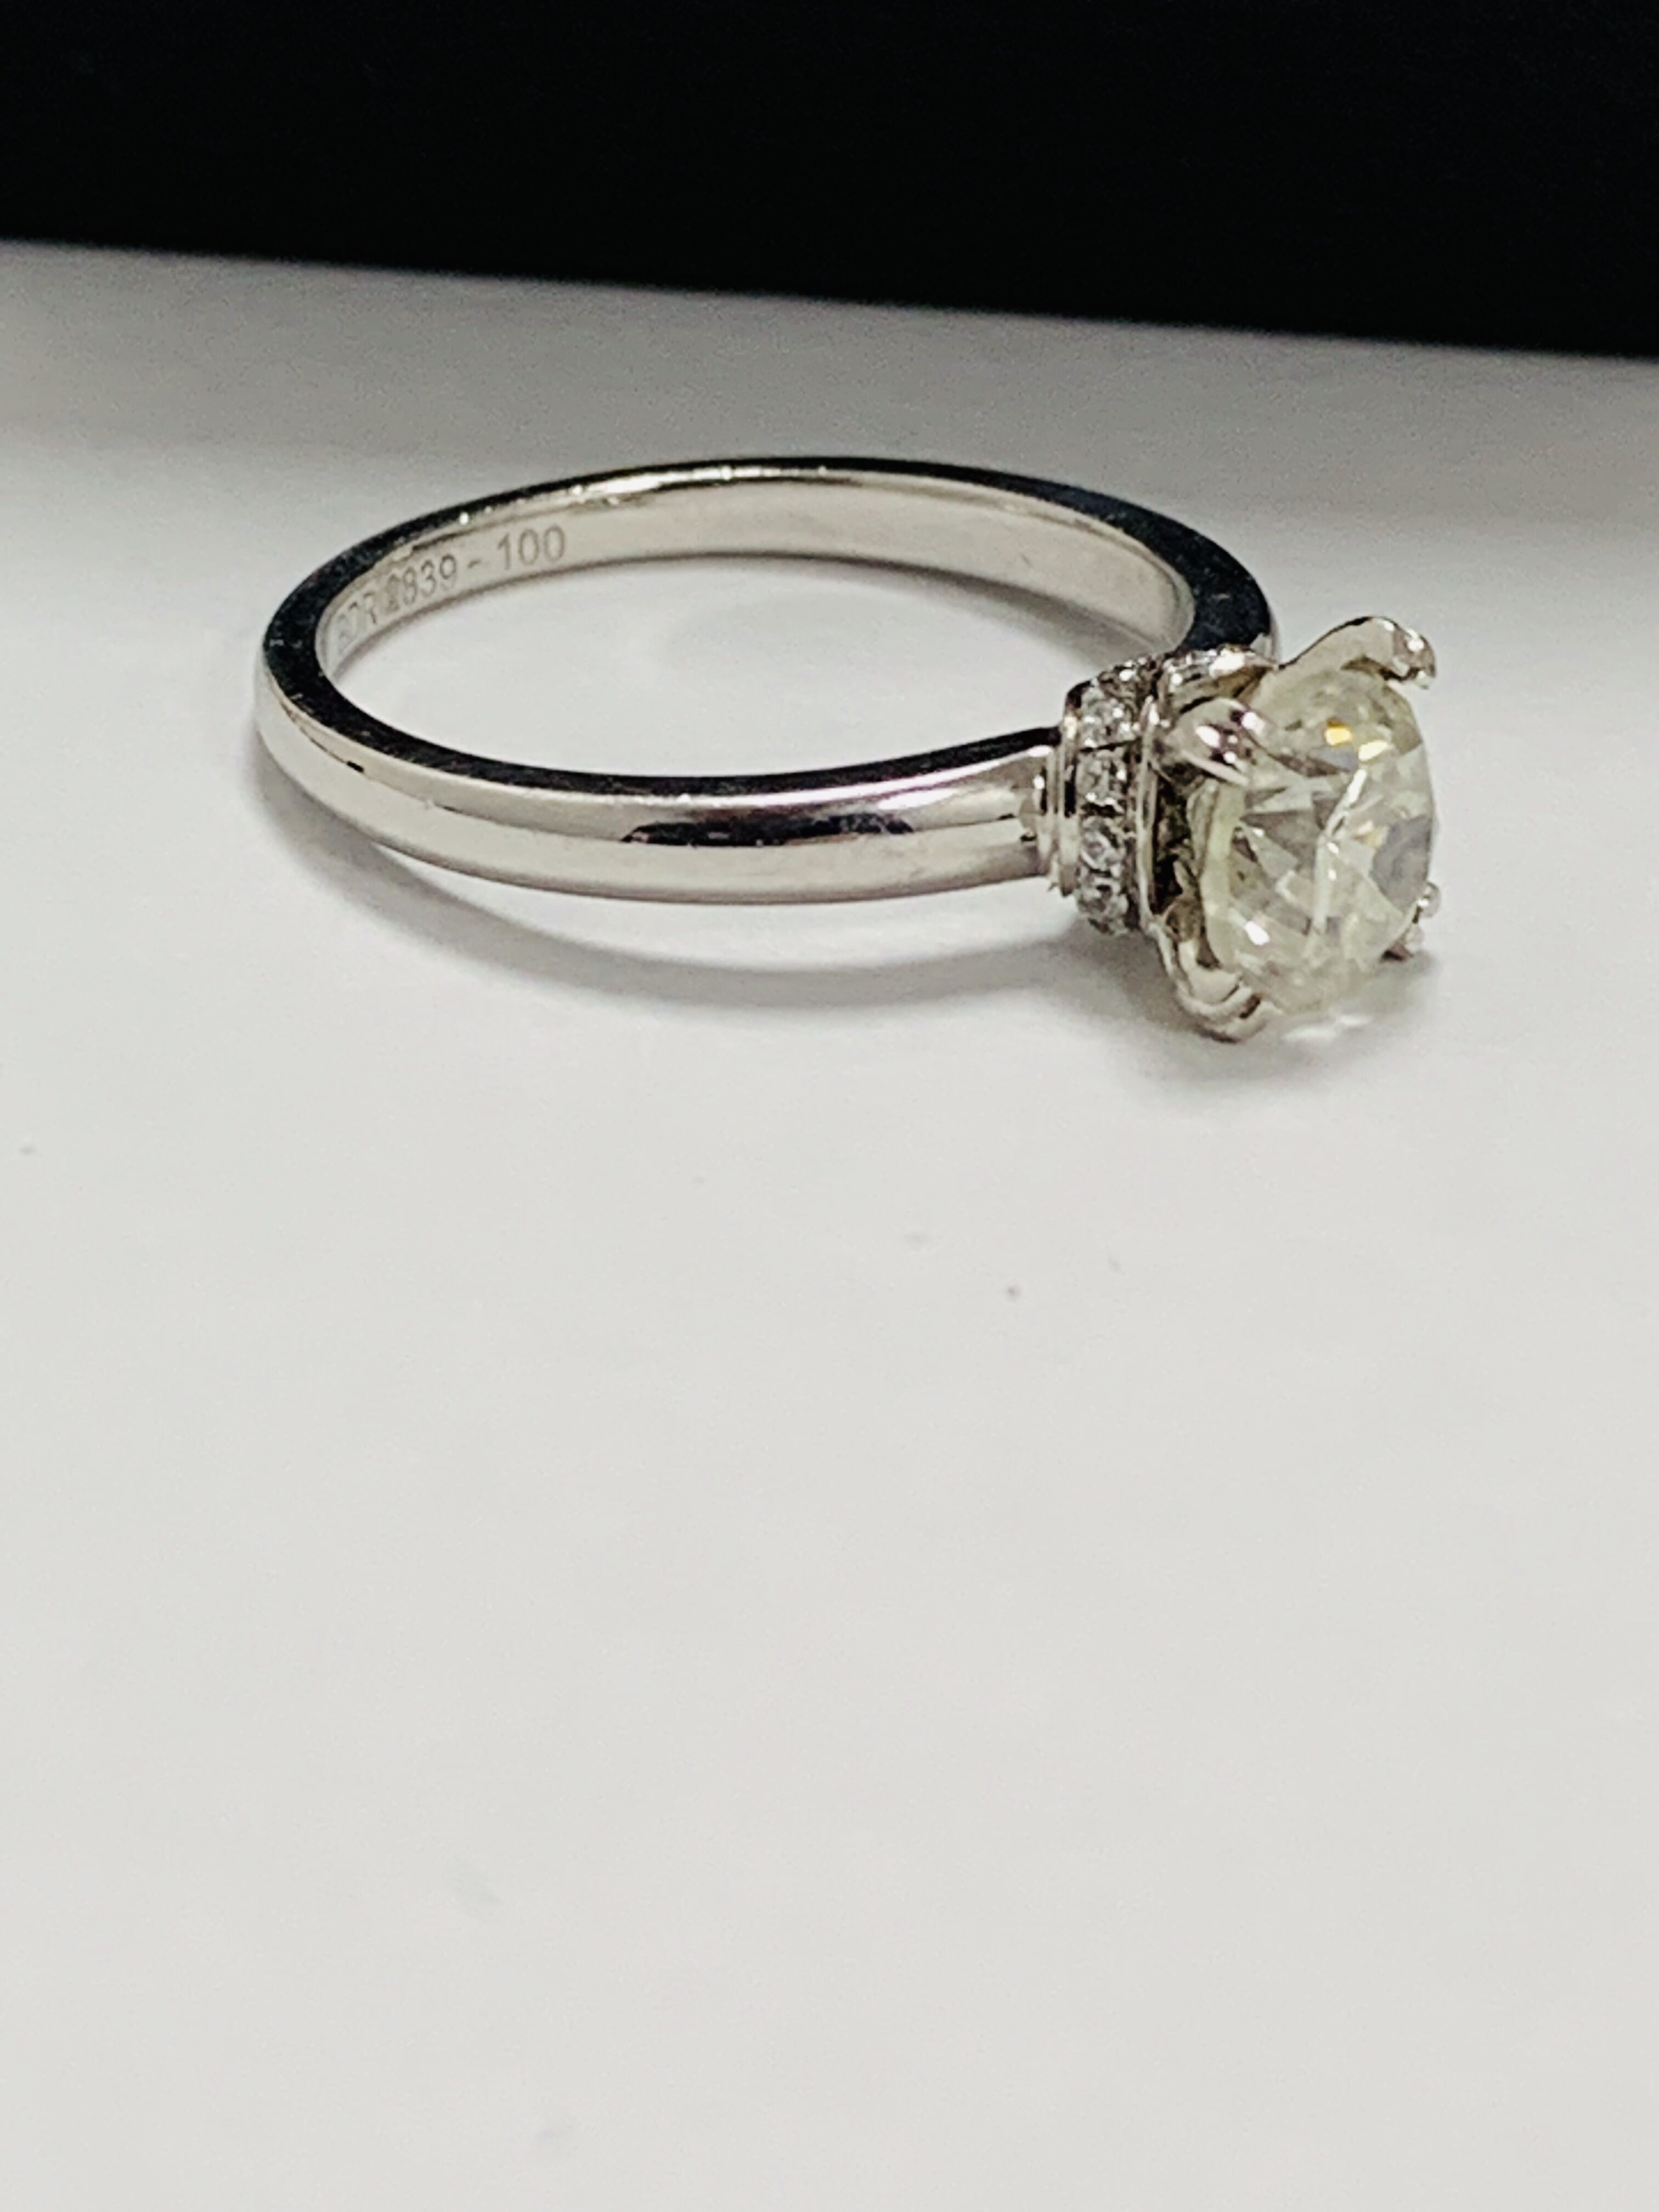 1ct Diamond Solitaire ring,PLatinum setting,diamonds in setting - Image 6 of 12